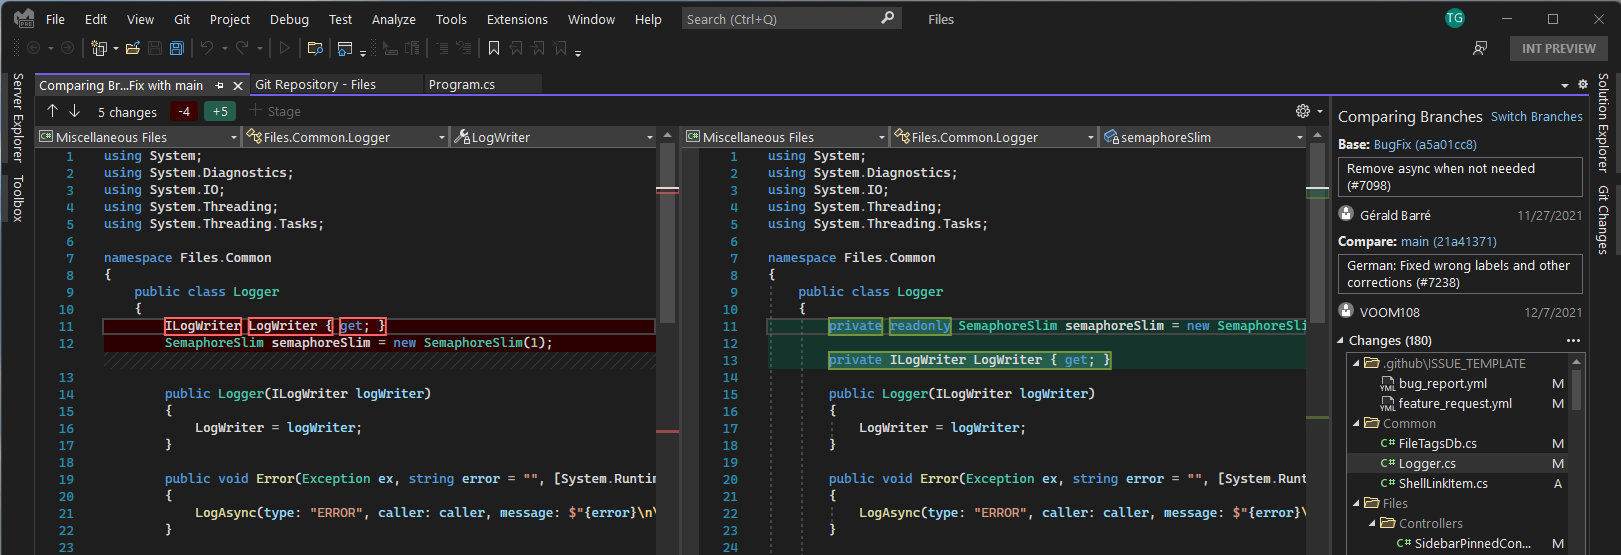 A screenshot of Visual Studio's Git compare screen